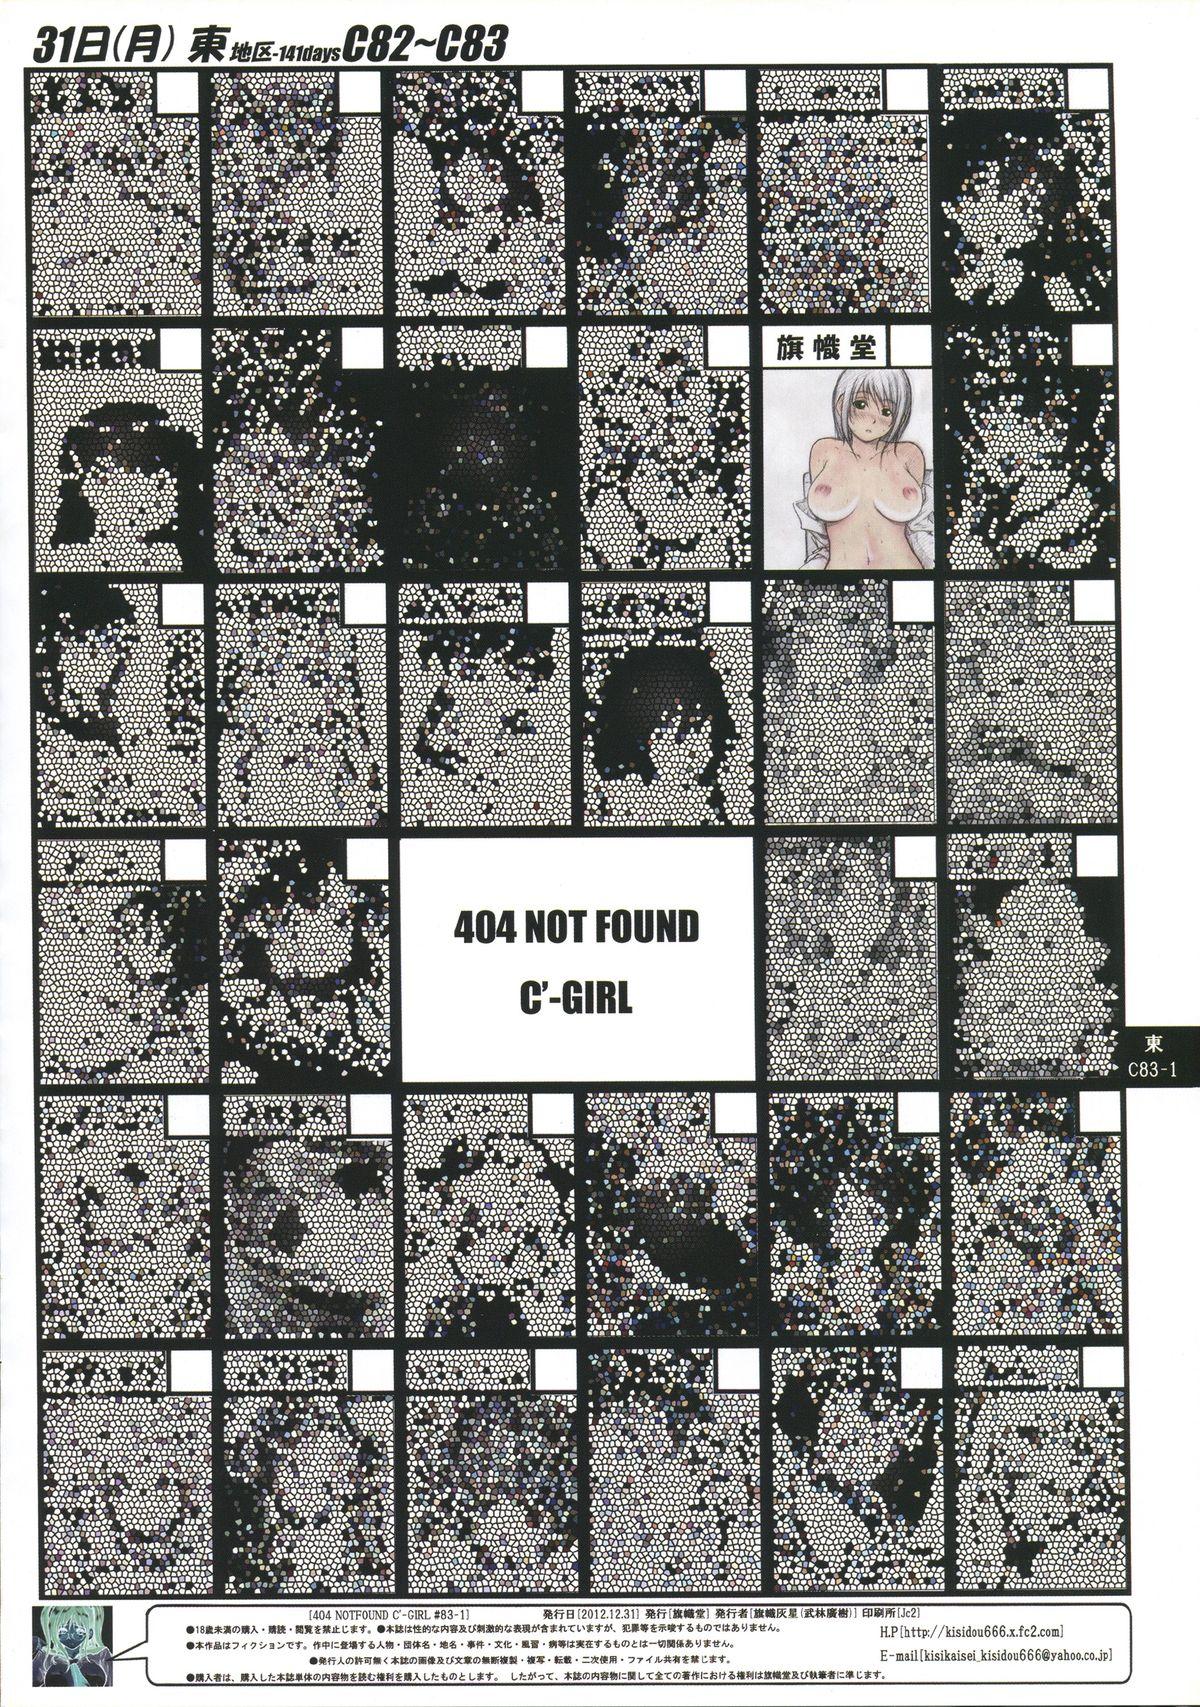 (C83) [Kisidou (Takebayasi Hiroki, Kishi Kasei)] 404 NOT FOUND C'-GIRL #83-1 1